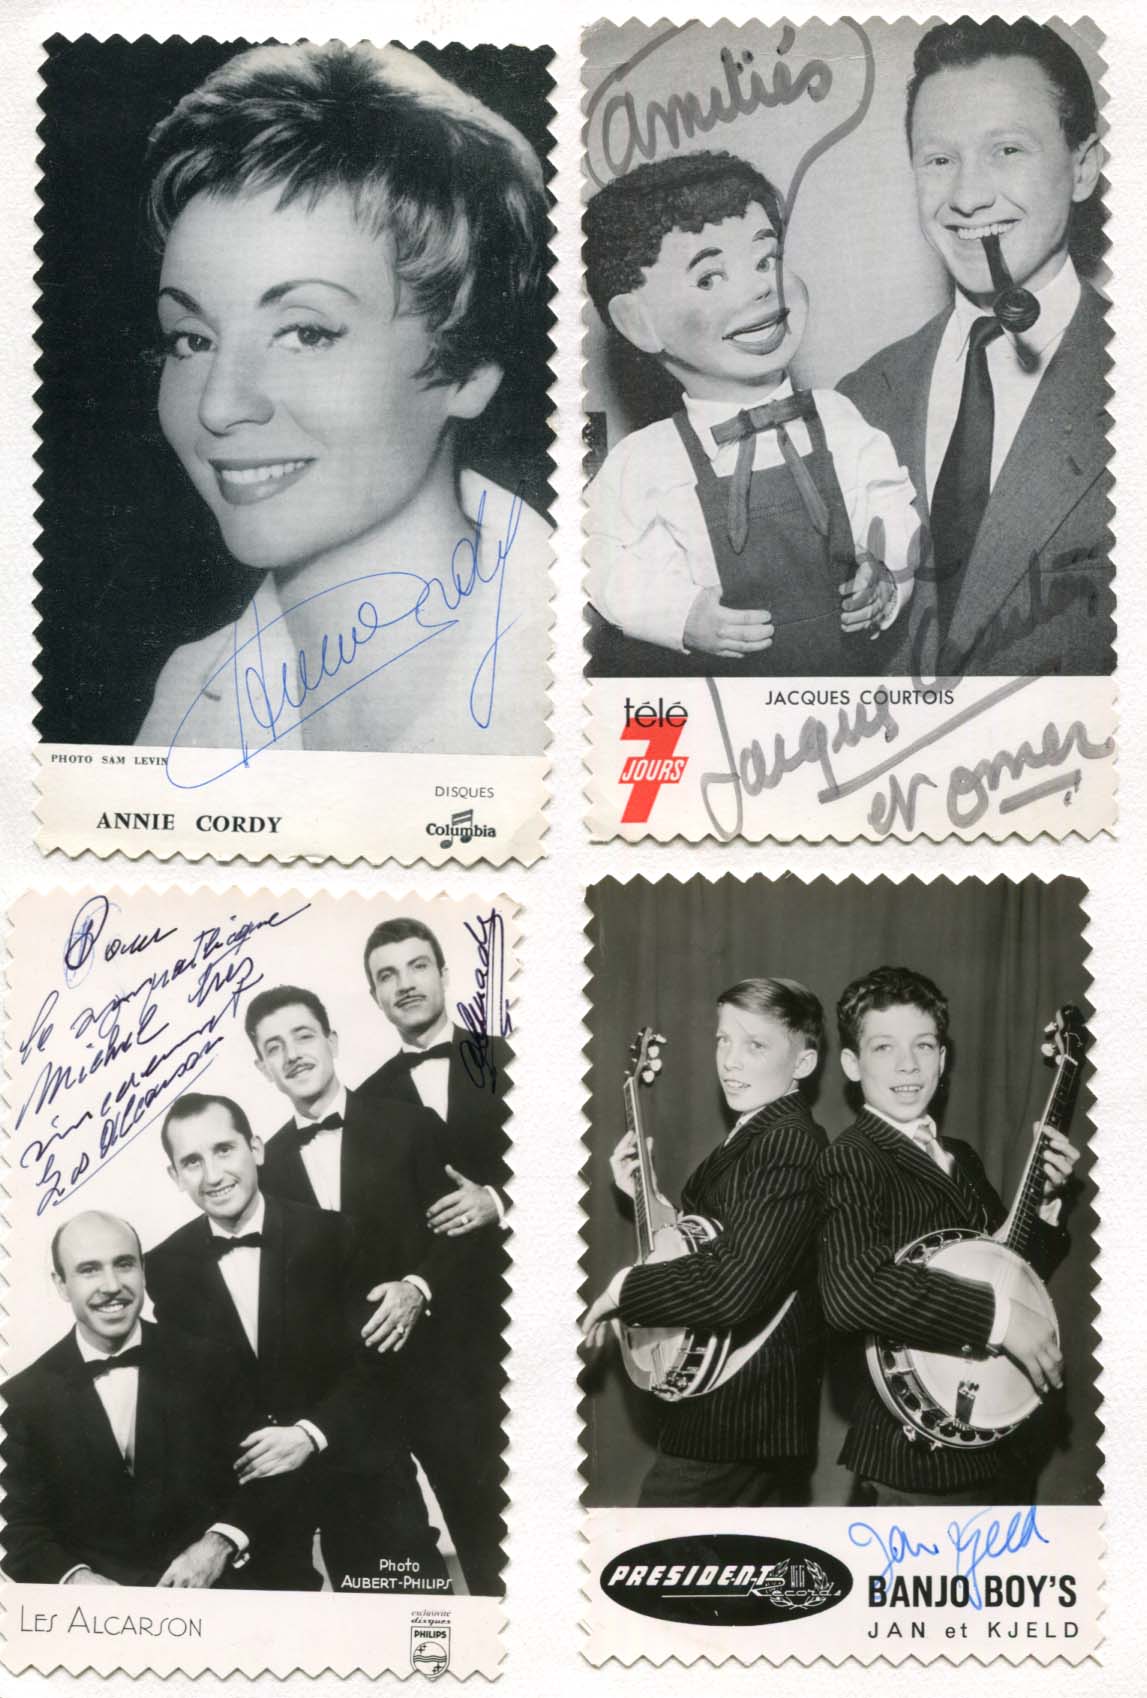 Jacques &amp; Andre &amp; Jean &amp; Michel  Anquetil &amp; Darrigade &amp; Graczyk &amp; Bernard Autograph Autogramm | ID 8213440331925